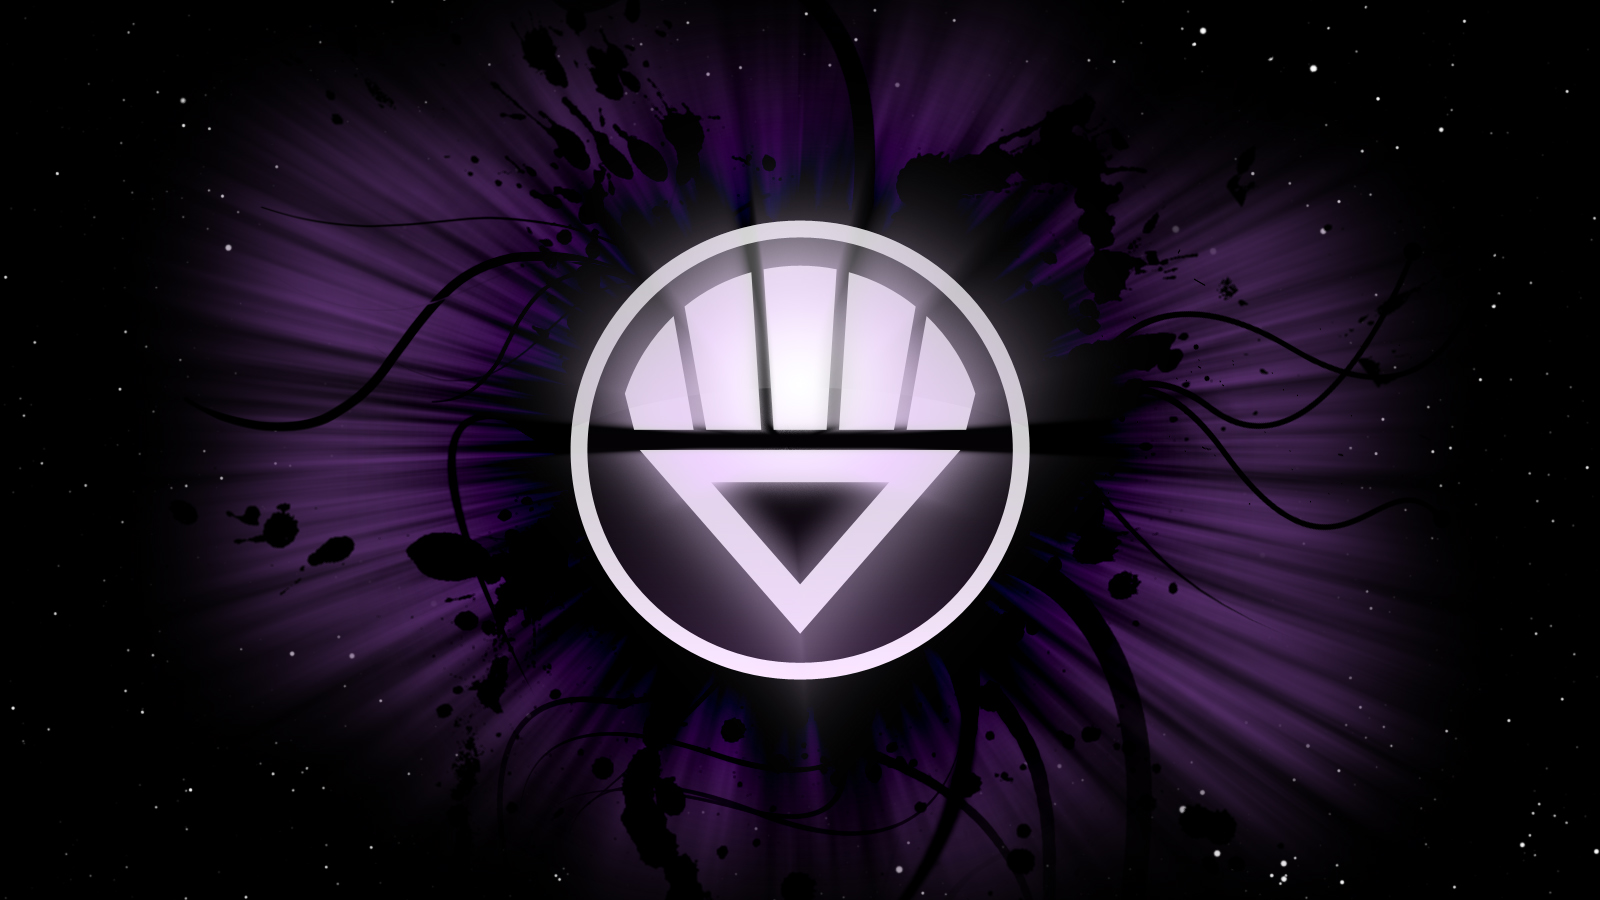 lantern corps wallpaper,purple,violet,logo,text,graphic design